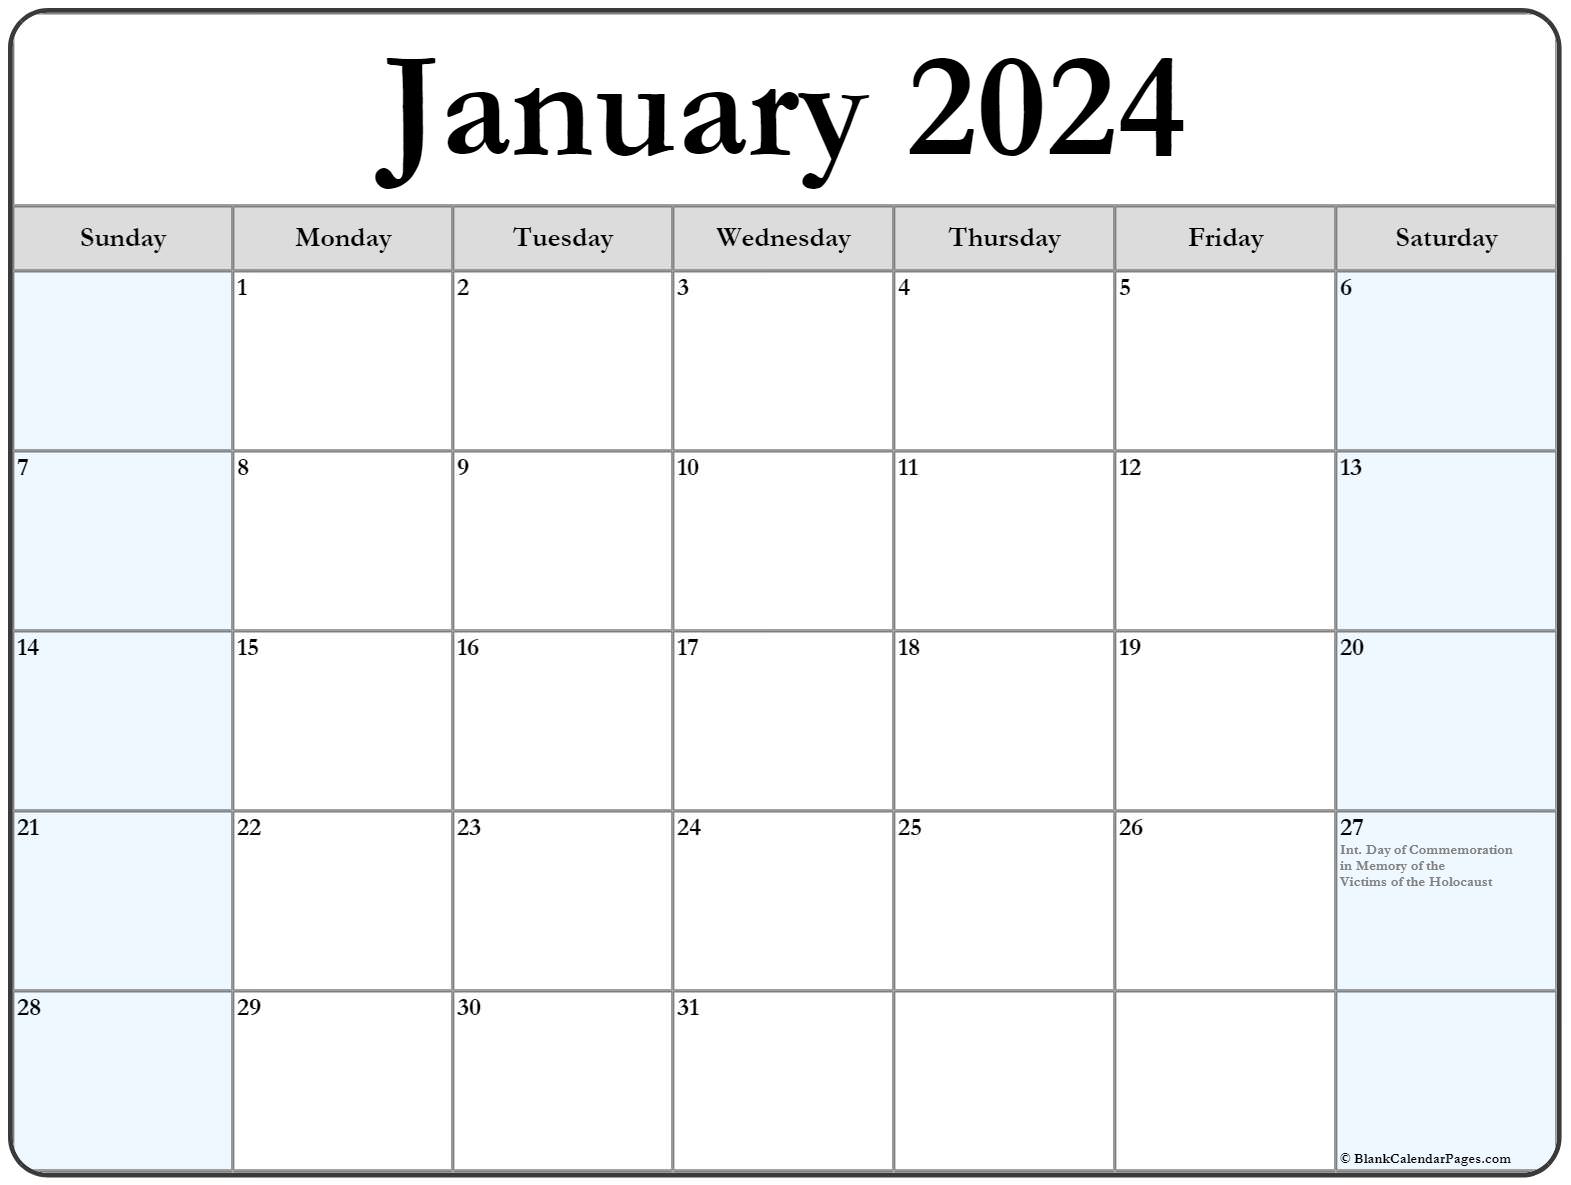 floral-january-2024-calendar-download-in-word-illustrator-eps-svg-jpg-template